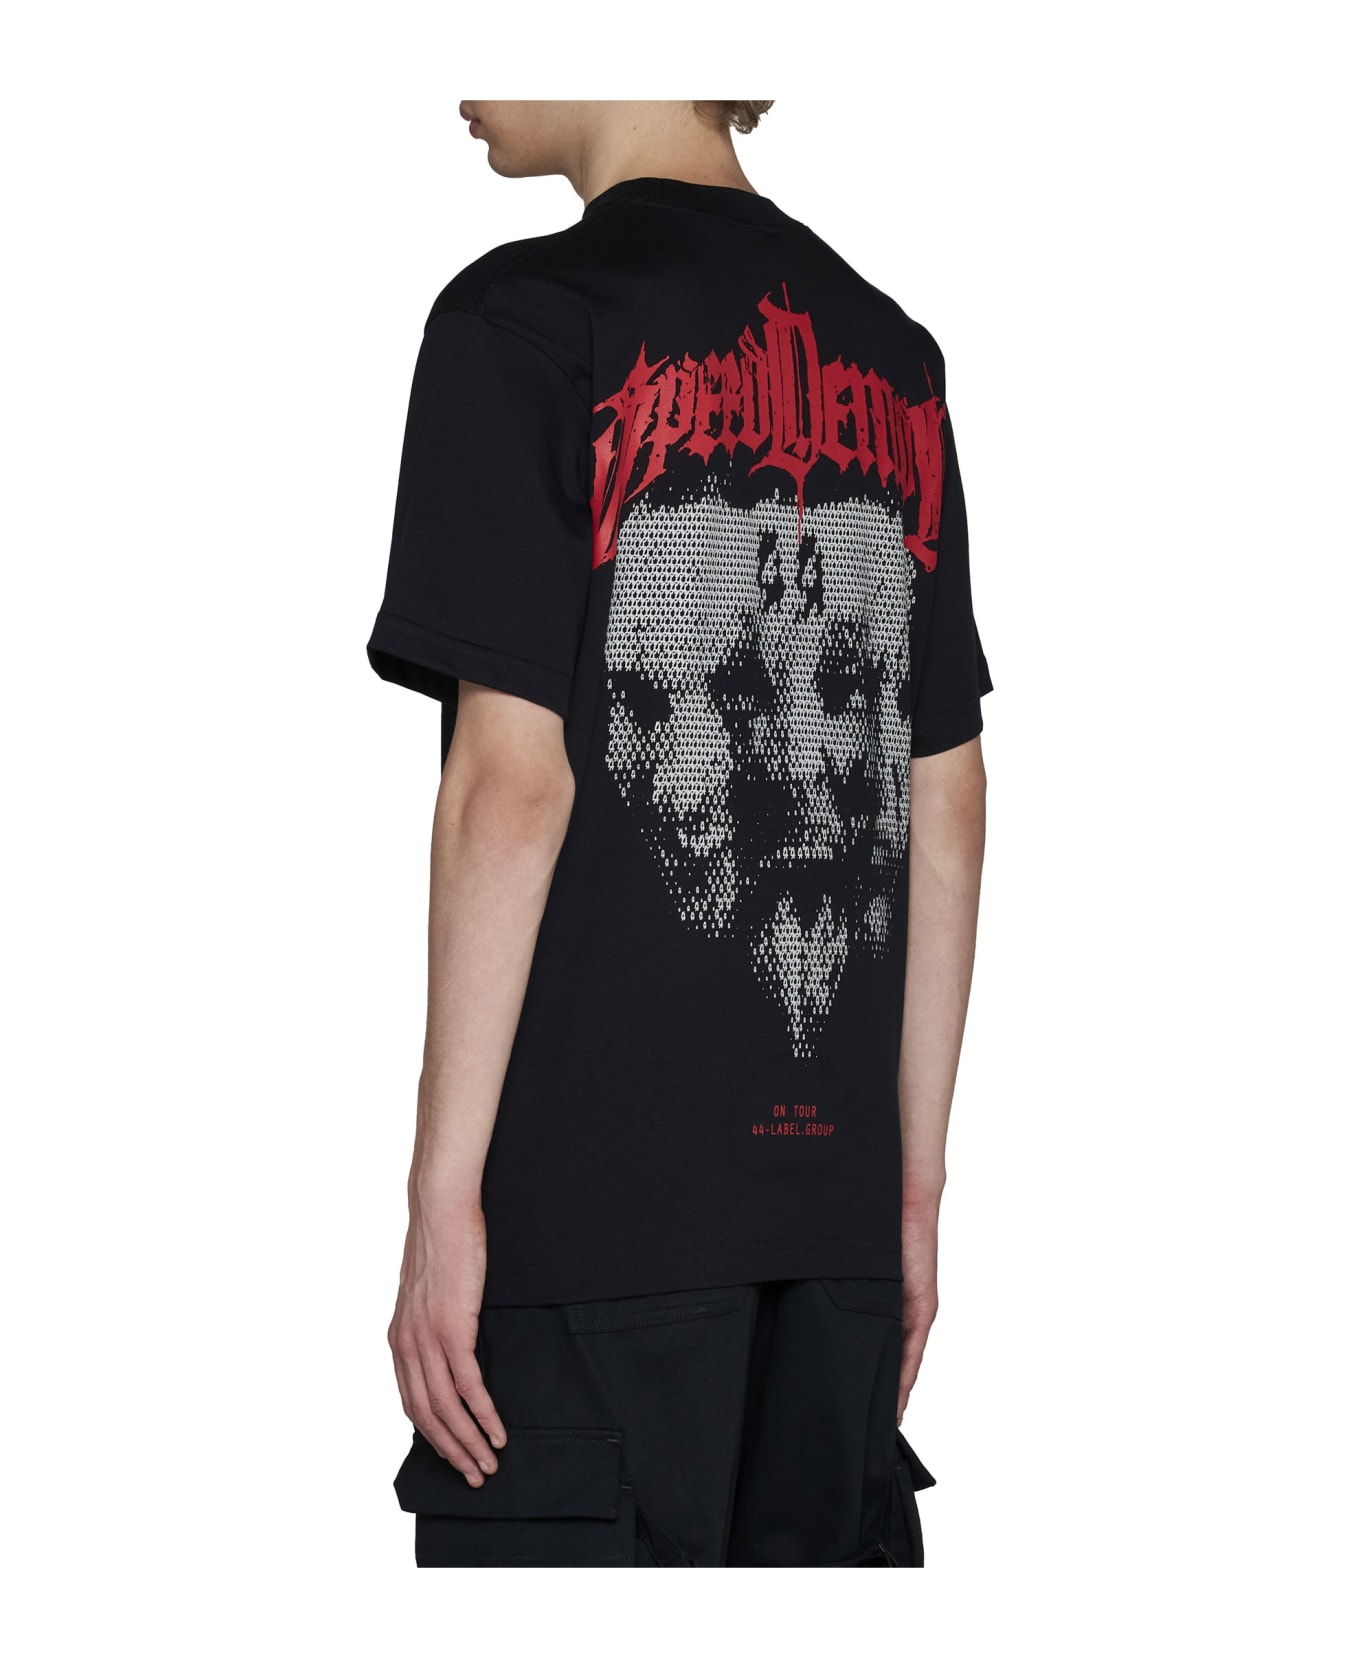 44 Label Group T-Shirt - Black+speed demon print シャツ